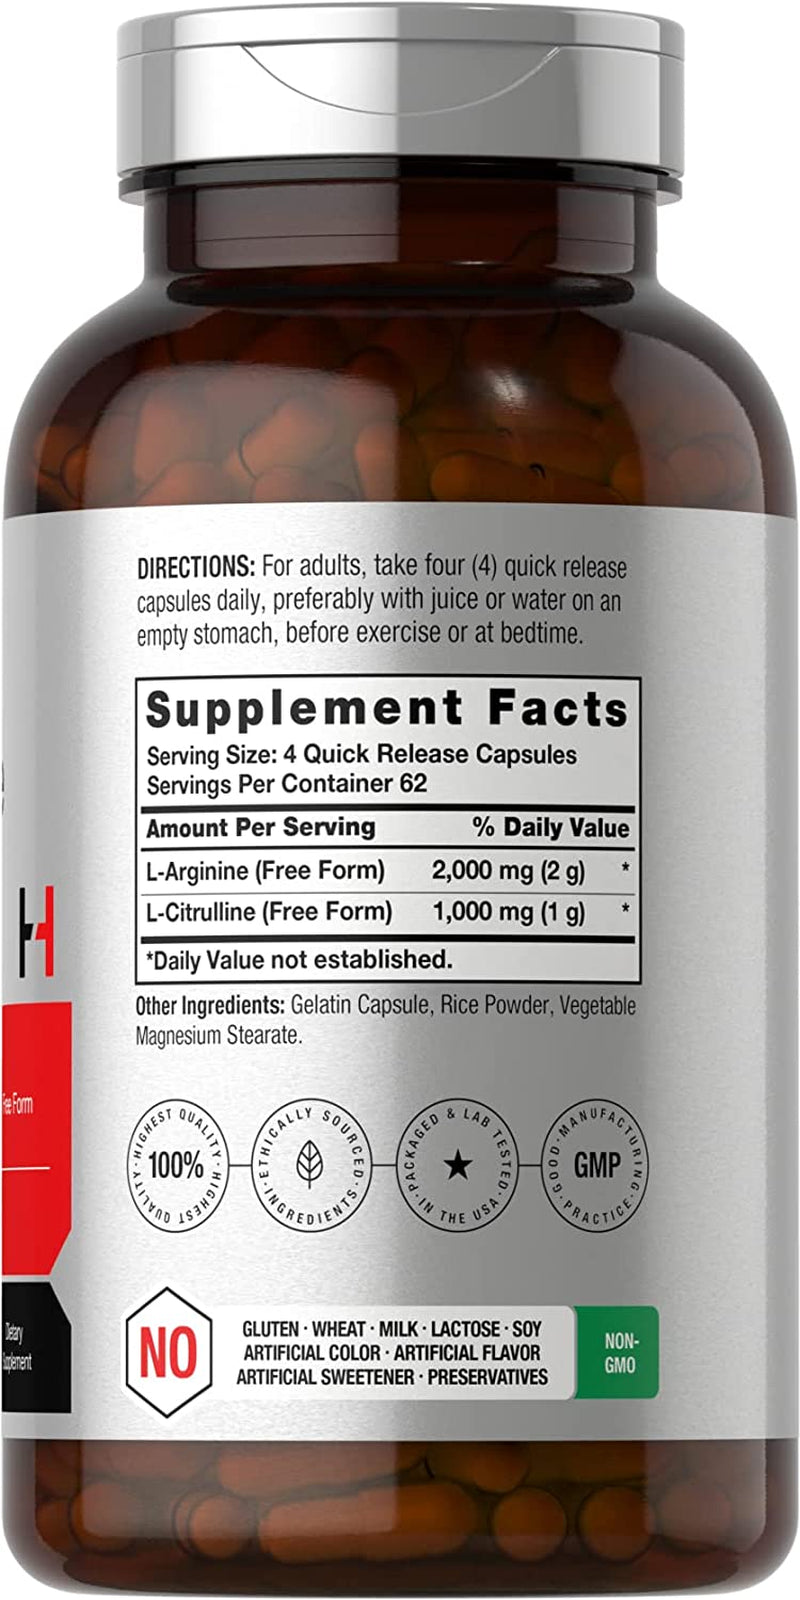 L-Arginine L-Citrulline Complex | 3000Mg | 250 Capsules | Non-Gmo, Gluten Free Supplement | by Horbaach